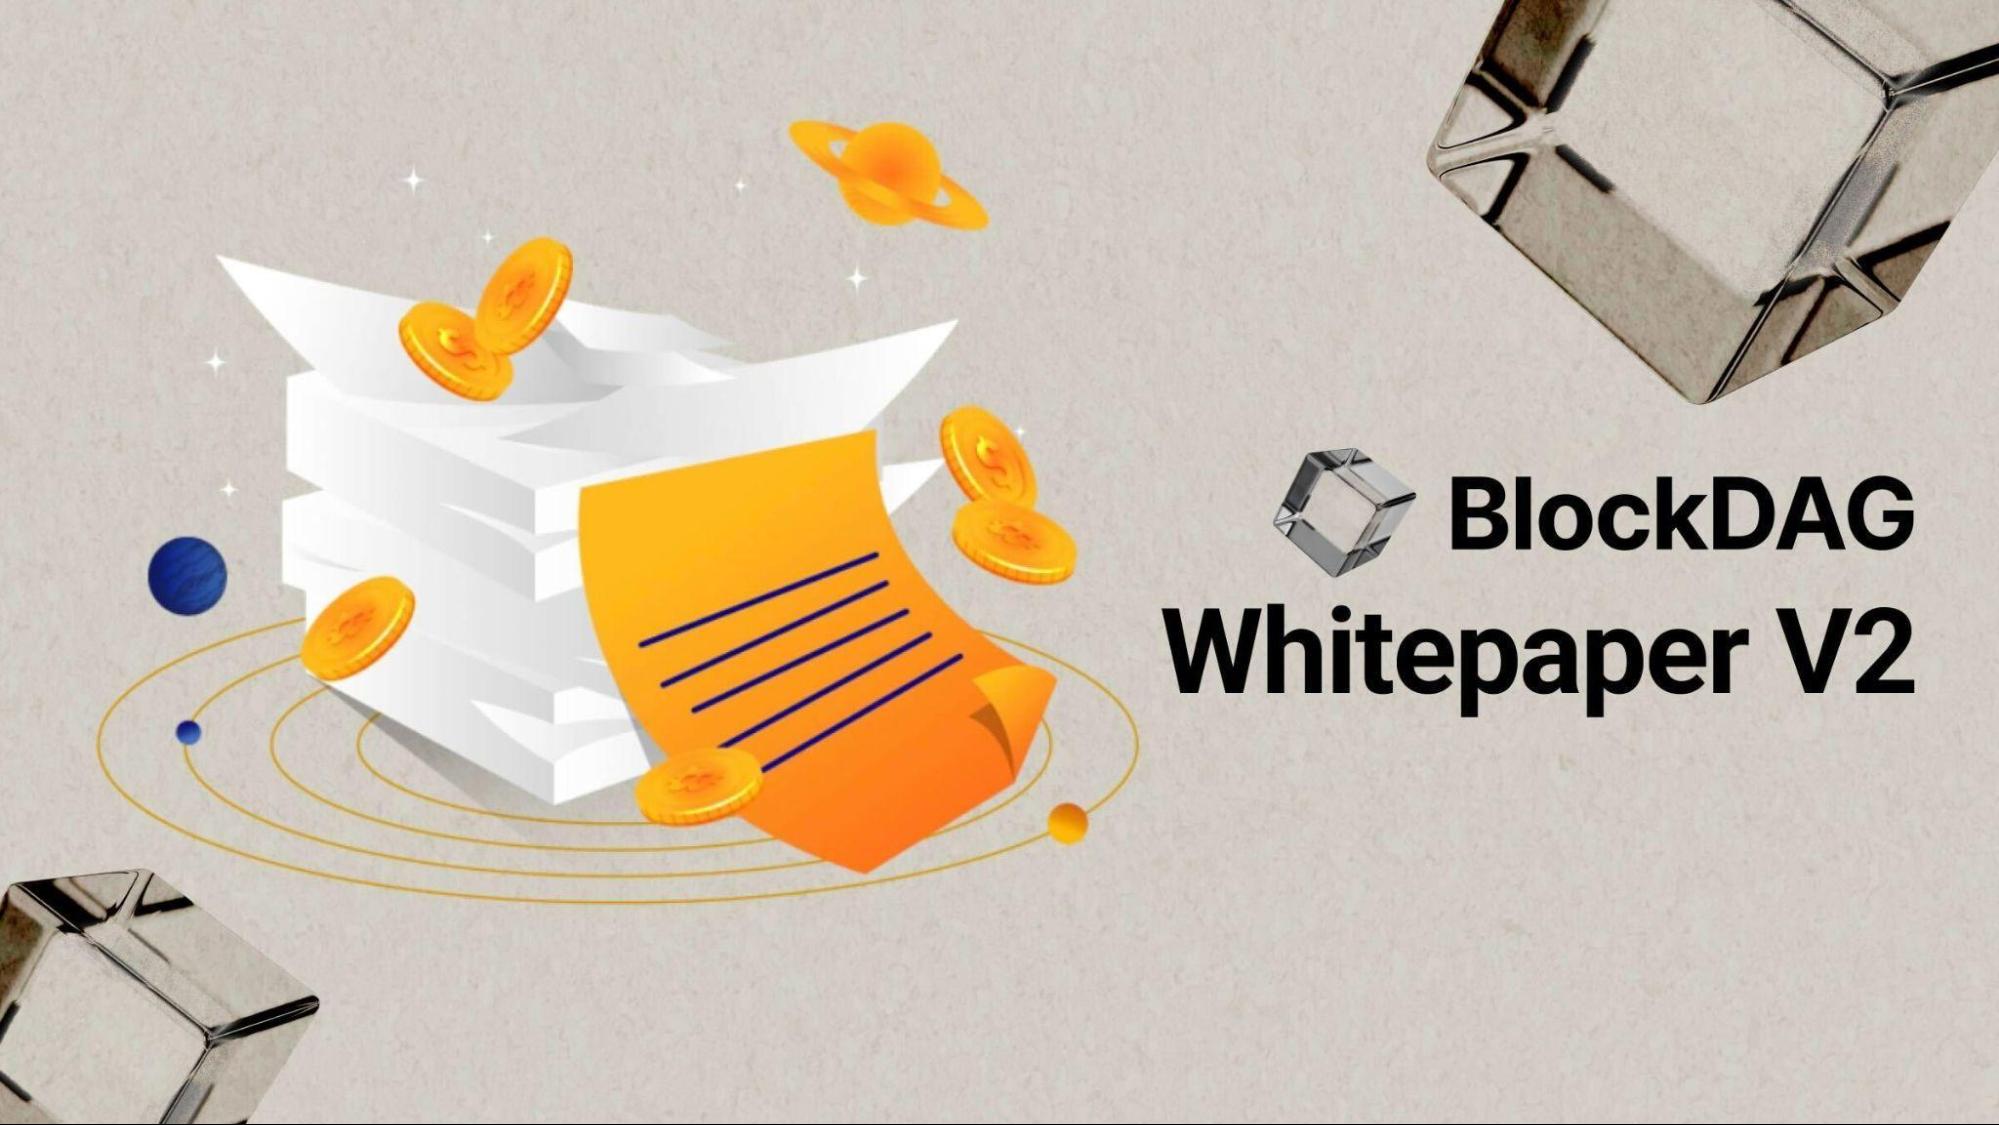 Solana Blockchain Leads Q1; BlockDAG Sets Records